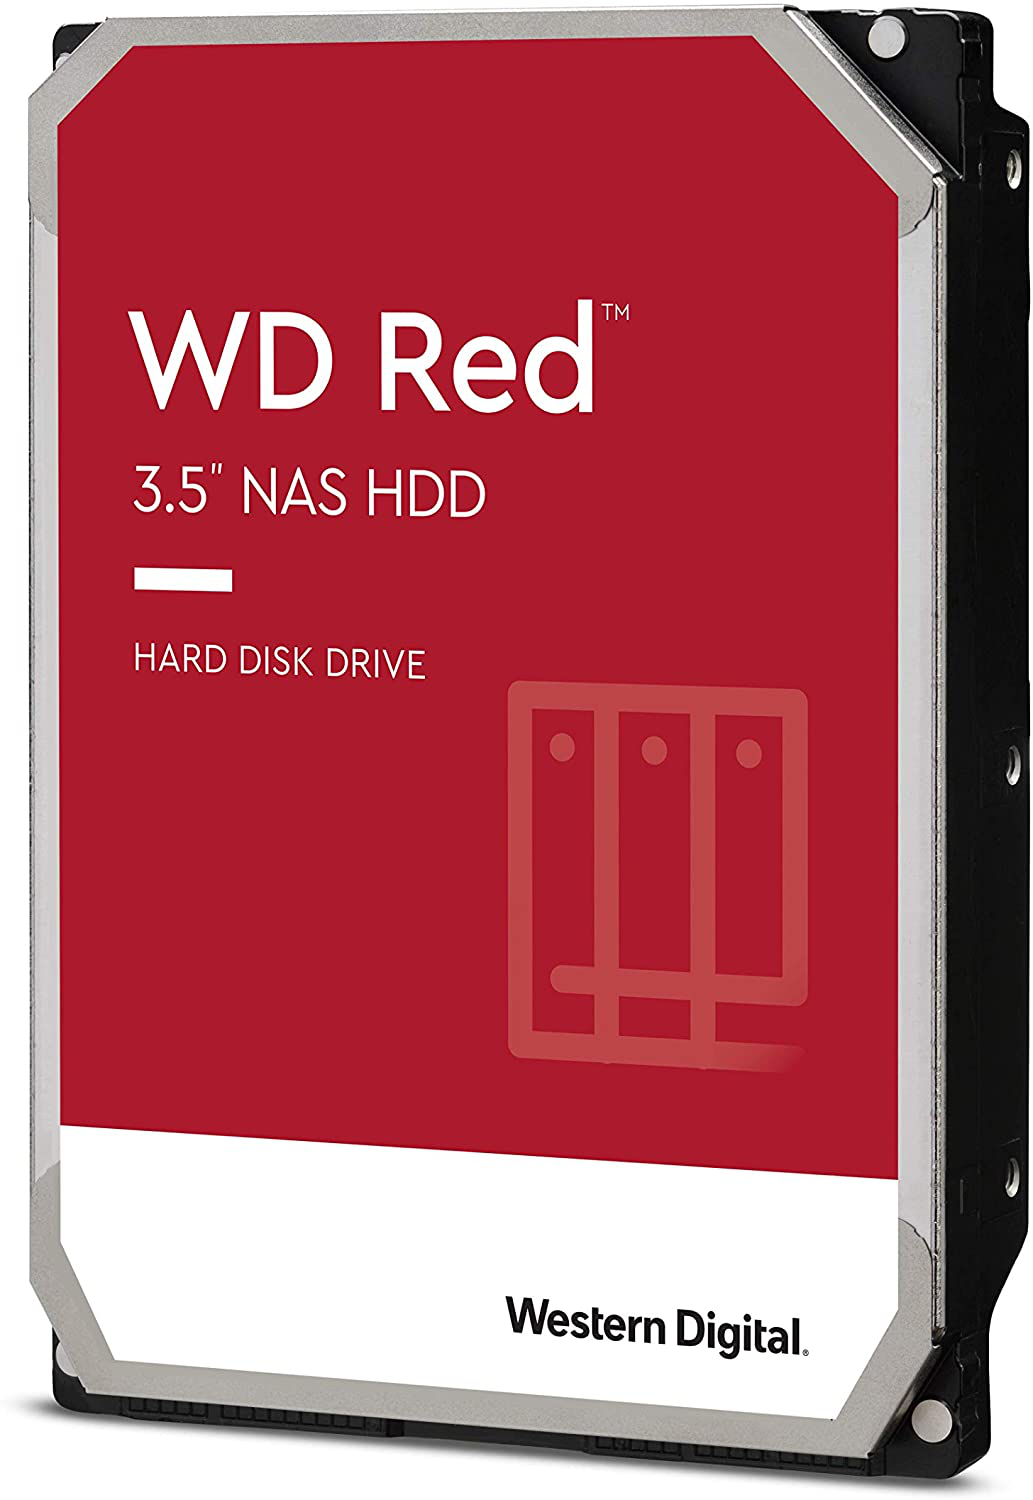 Western Digital 4TB WD Red NAS Internal Hard Drive HDD - 5400 RPM, SATA 6 Gb/S, SMR, 256MB Cache, 3.5" - WD40EFAX